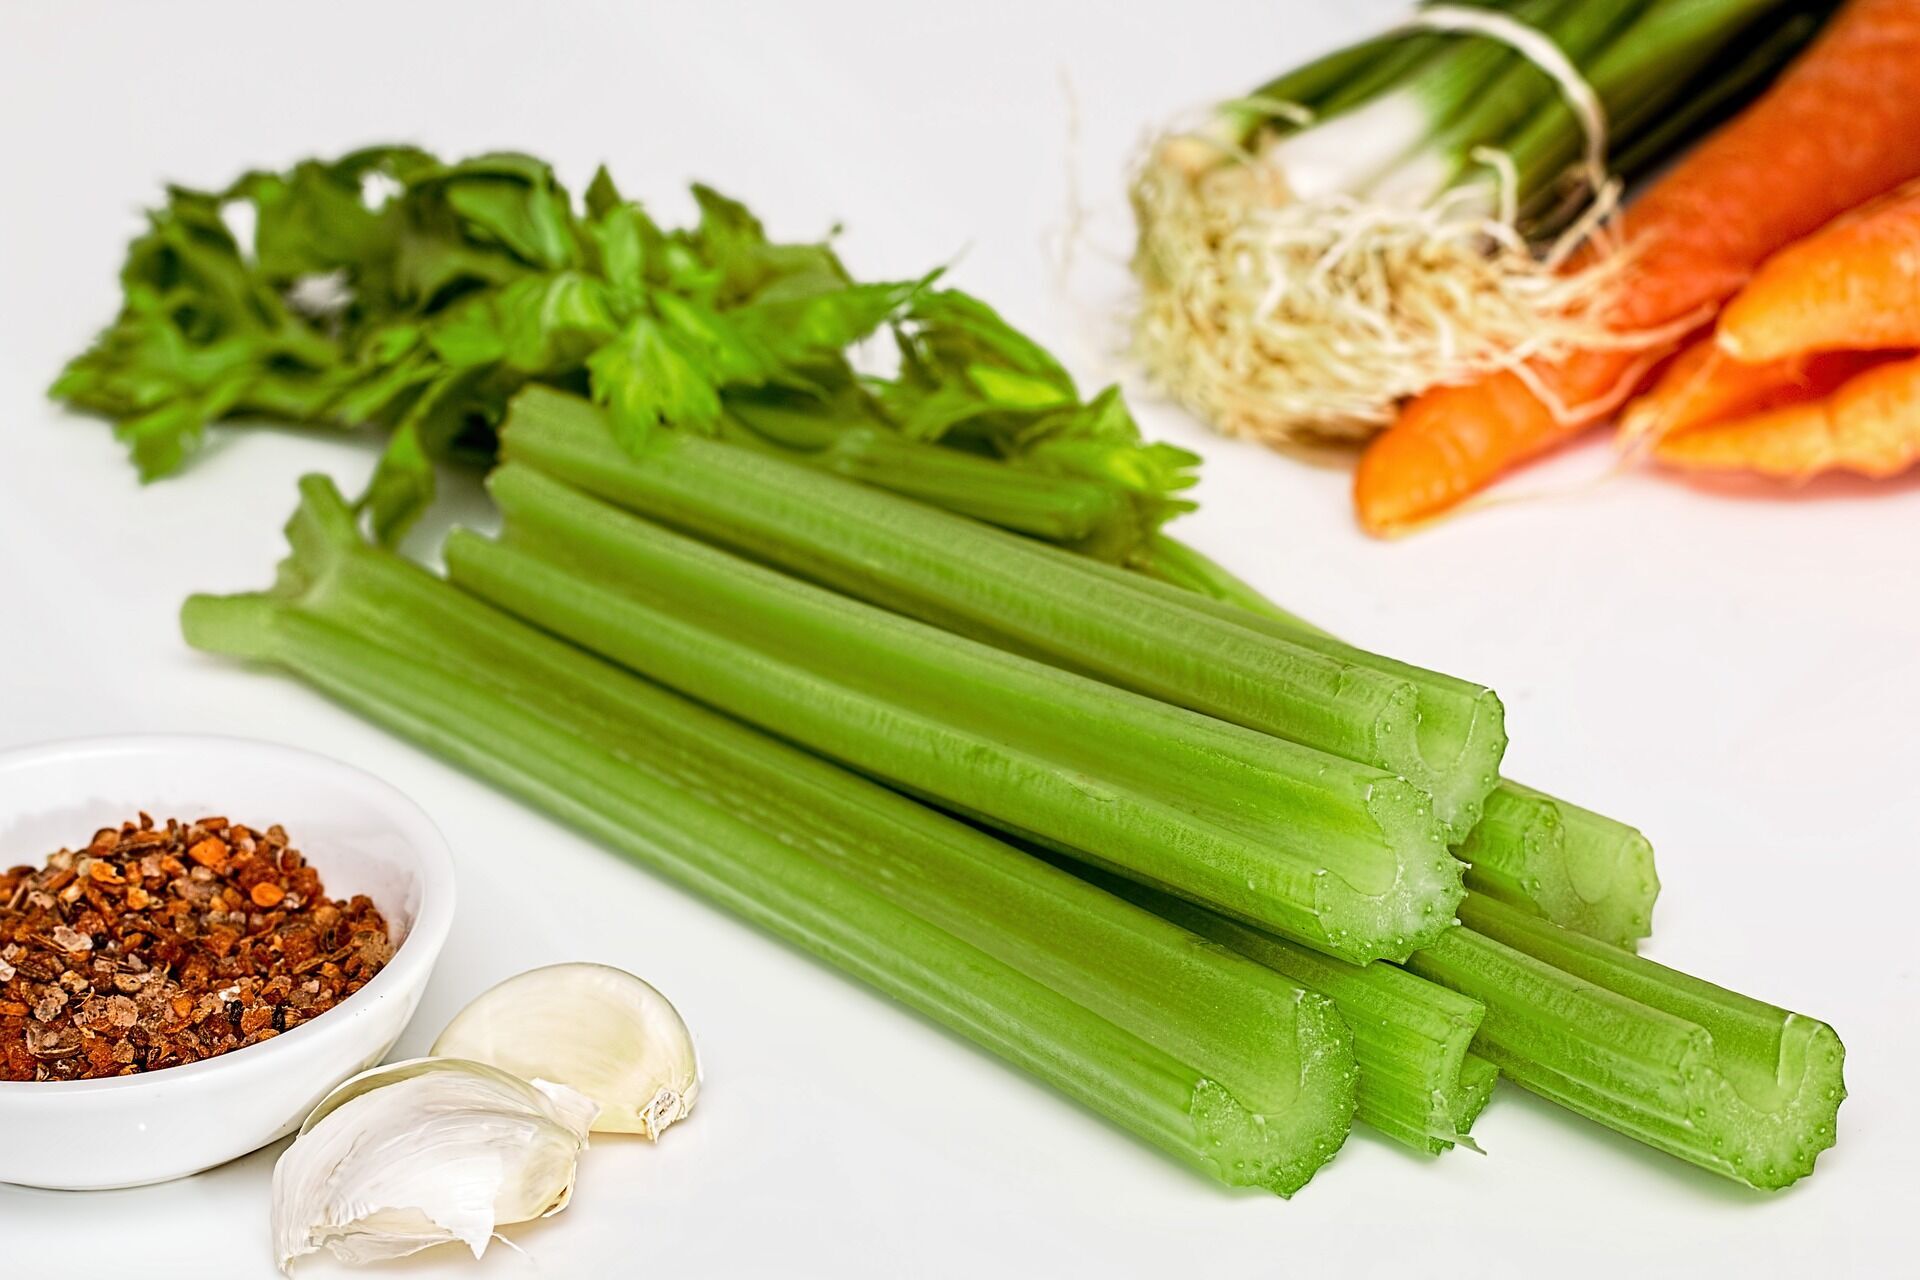 Celery is very healthy